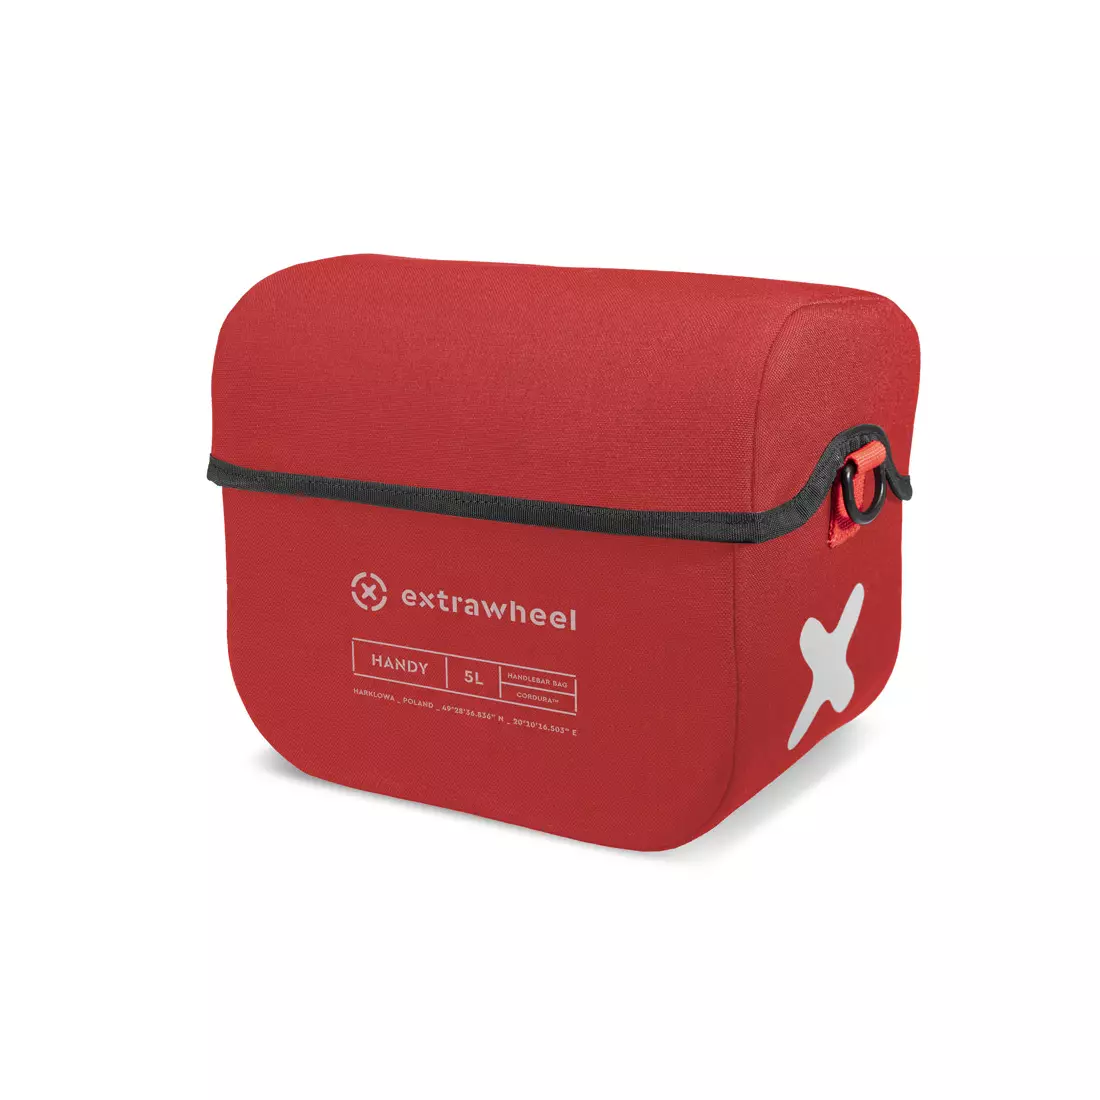 EXTRAWHEEL HANDY PREMIUM CORDURA handlebar bag, red 5 L